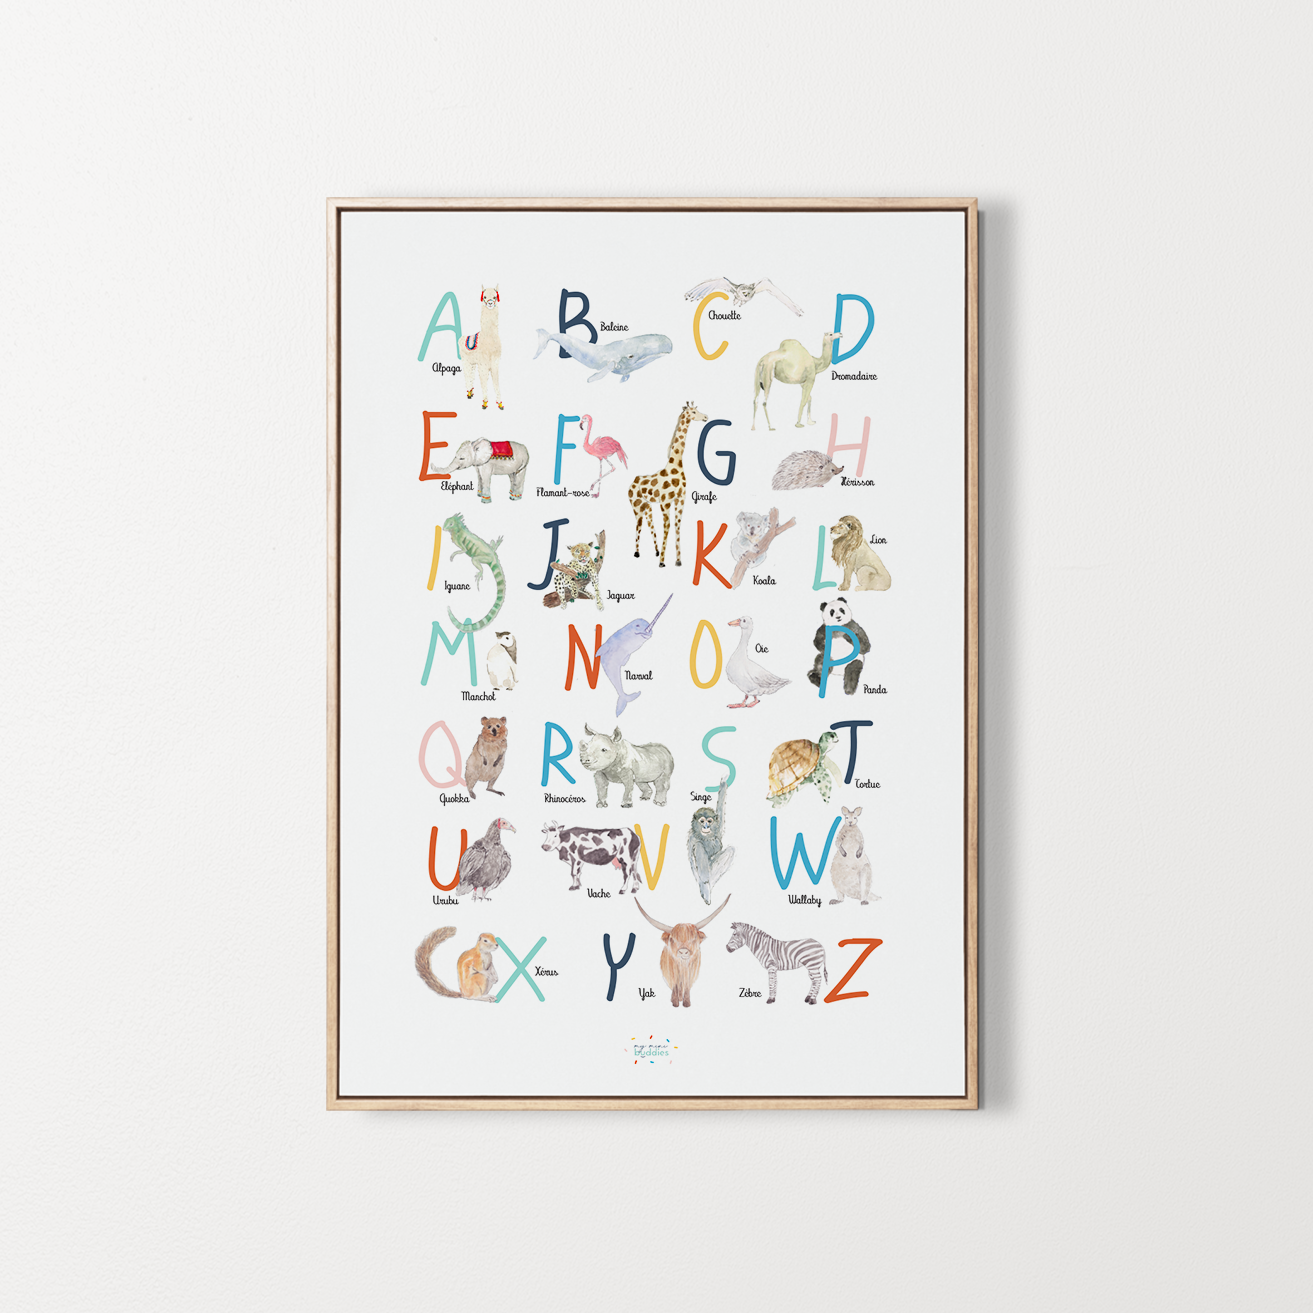 The Alphabet Poster